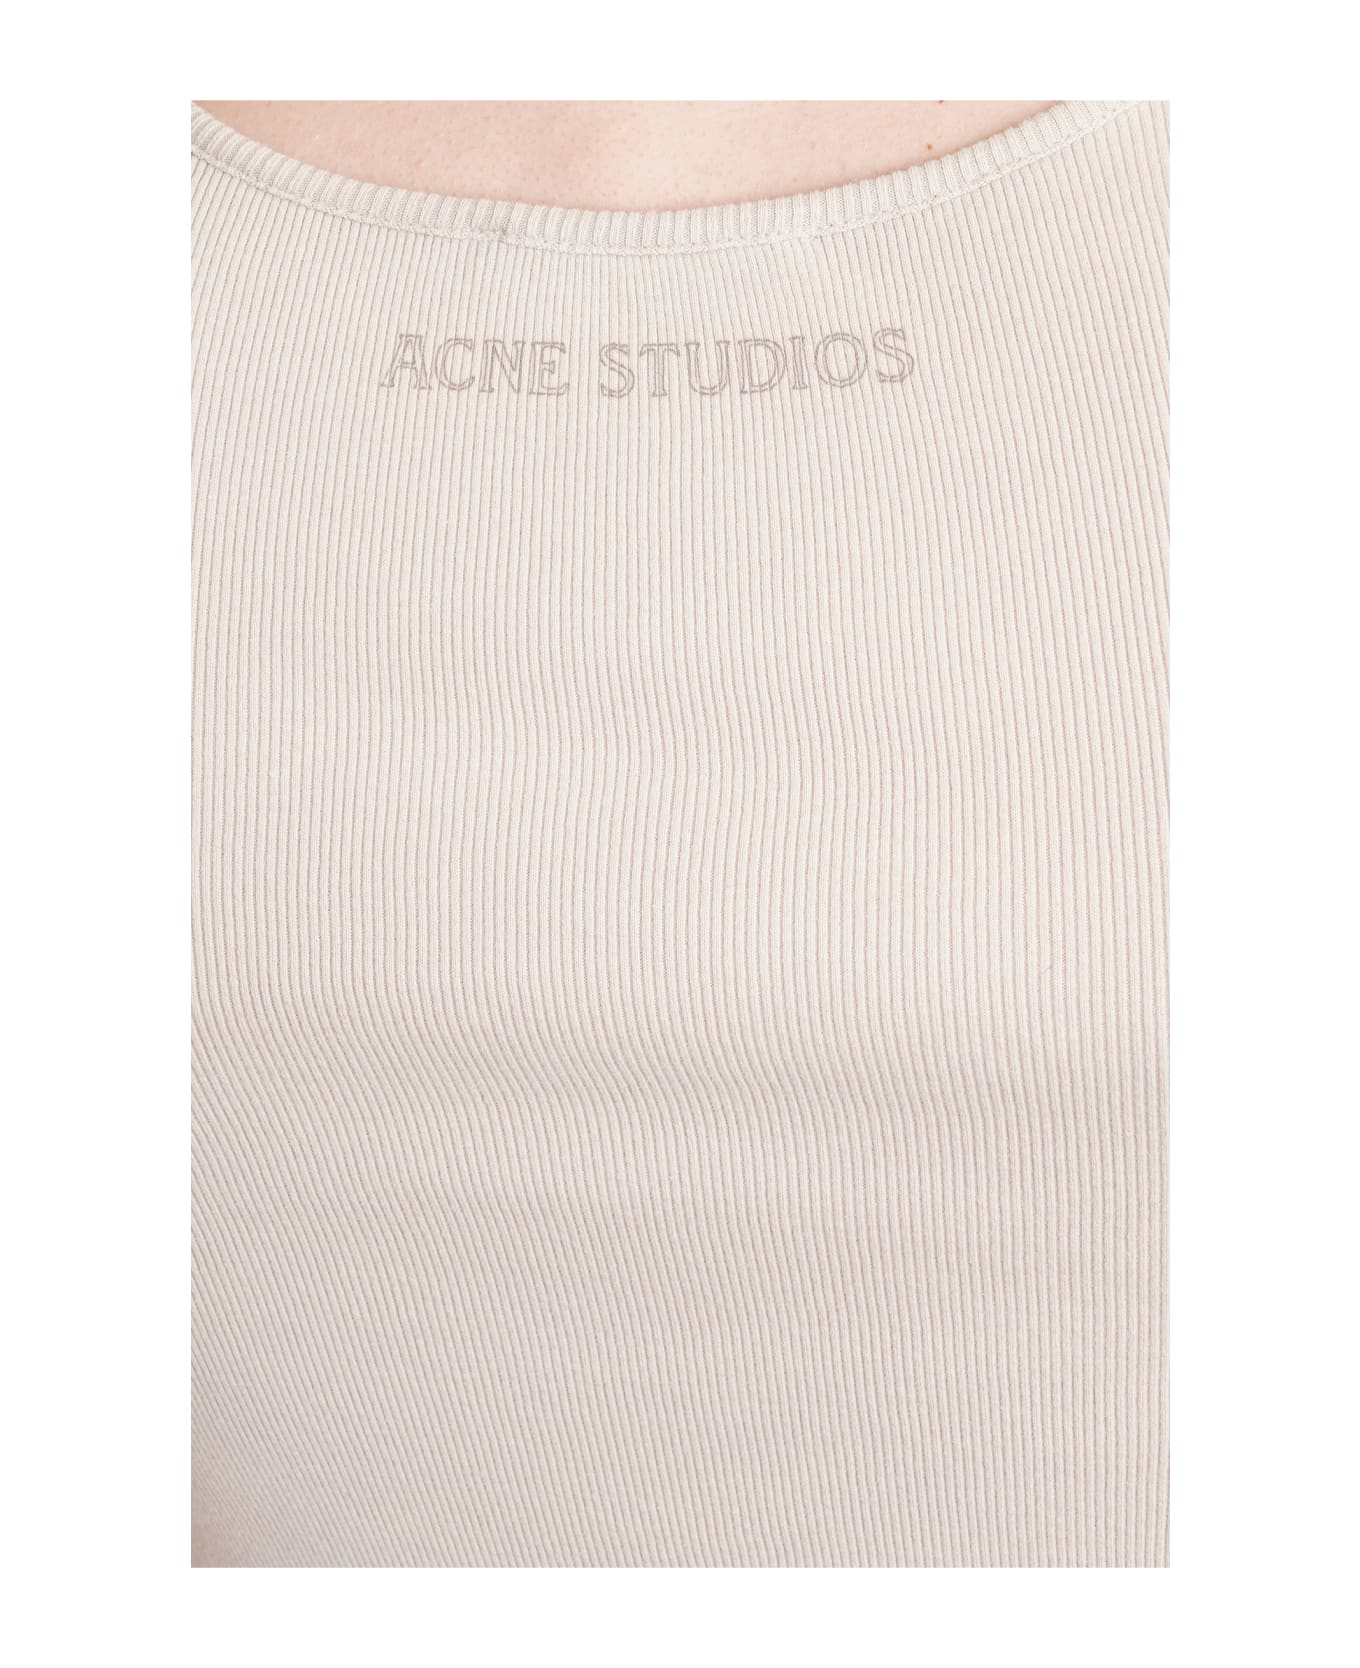 Acne Studios Tank Top In Beige Cotton - Mushroom beige